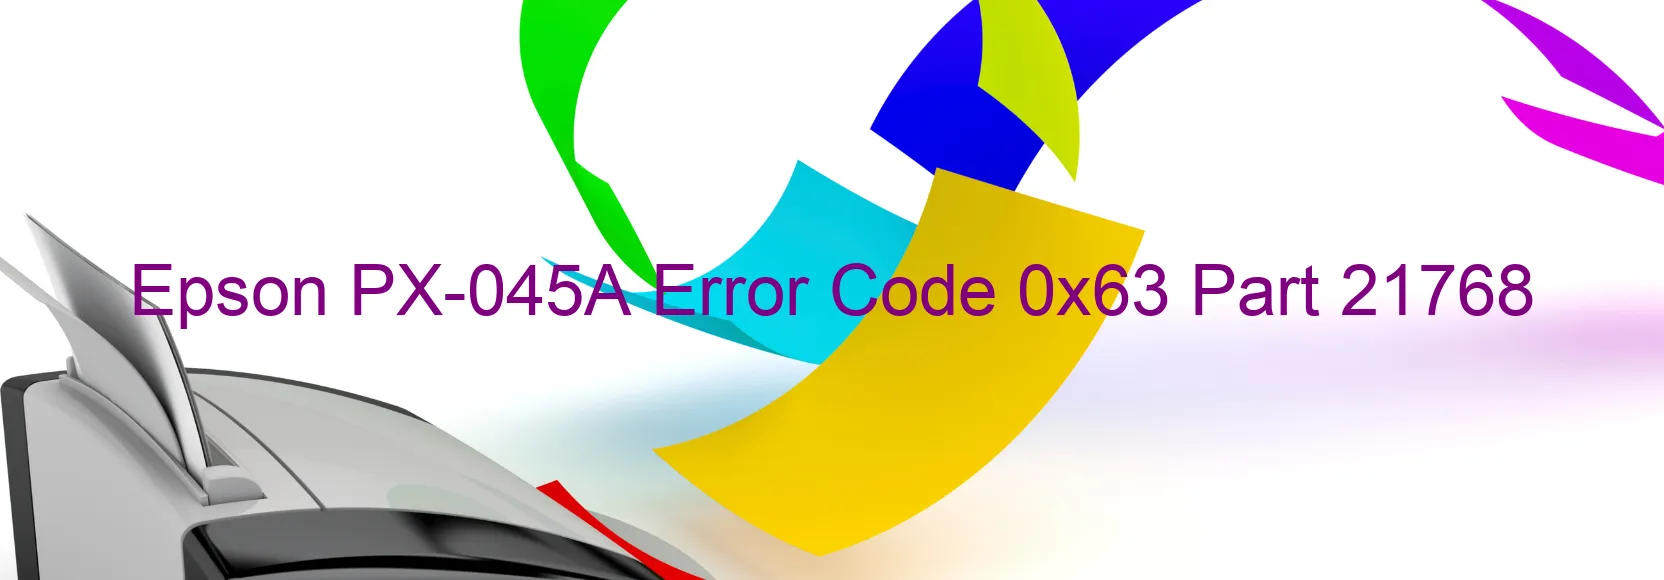 Epson PX-045A Error Code 0x63 Part 21768